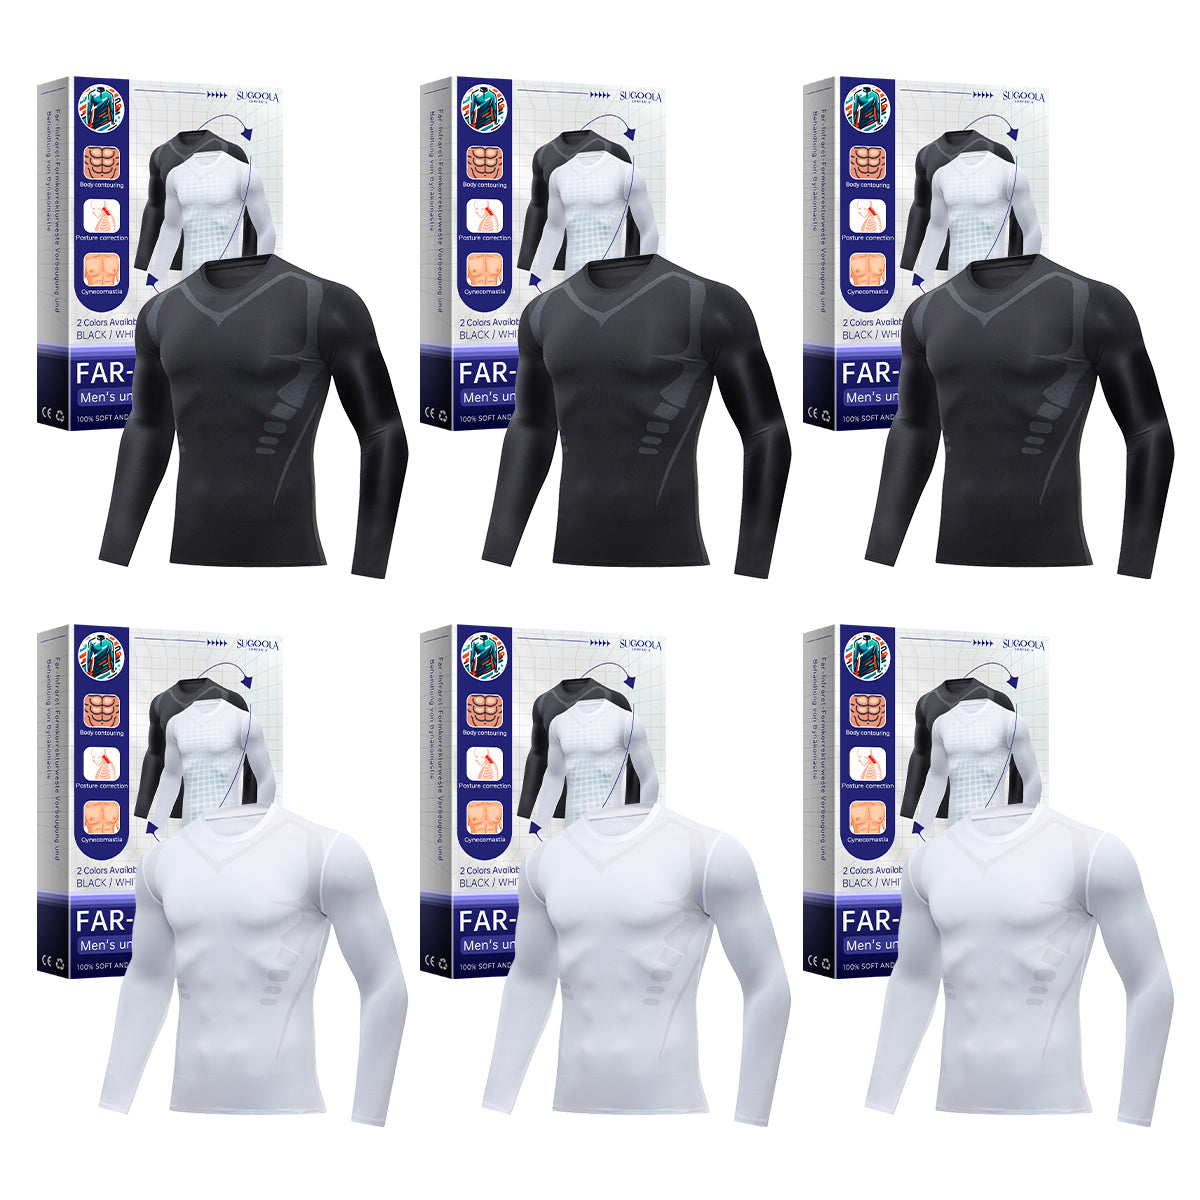 🦾Sugoola™ Far-Infrared Tourmaline Magnetic Mens Undershirt